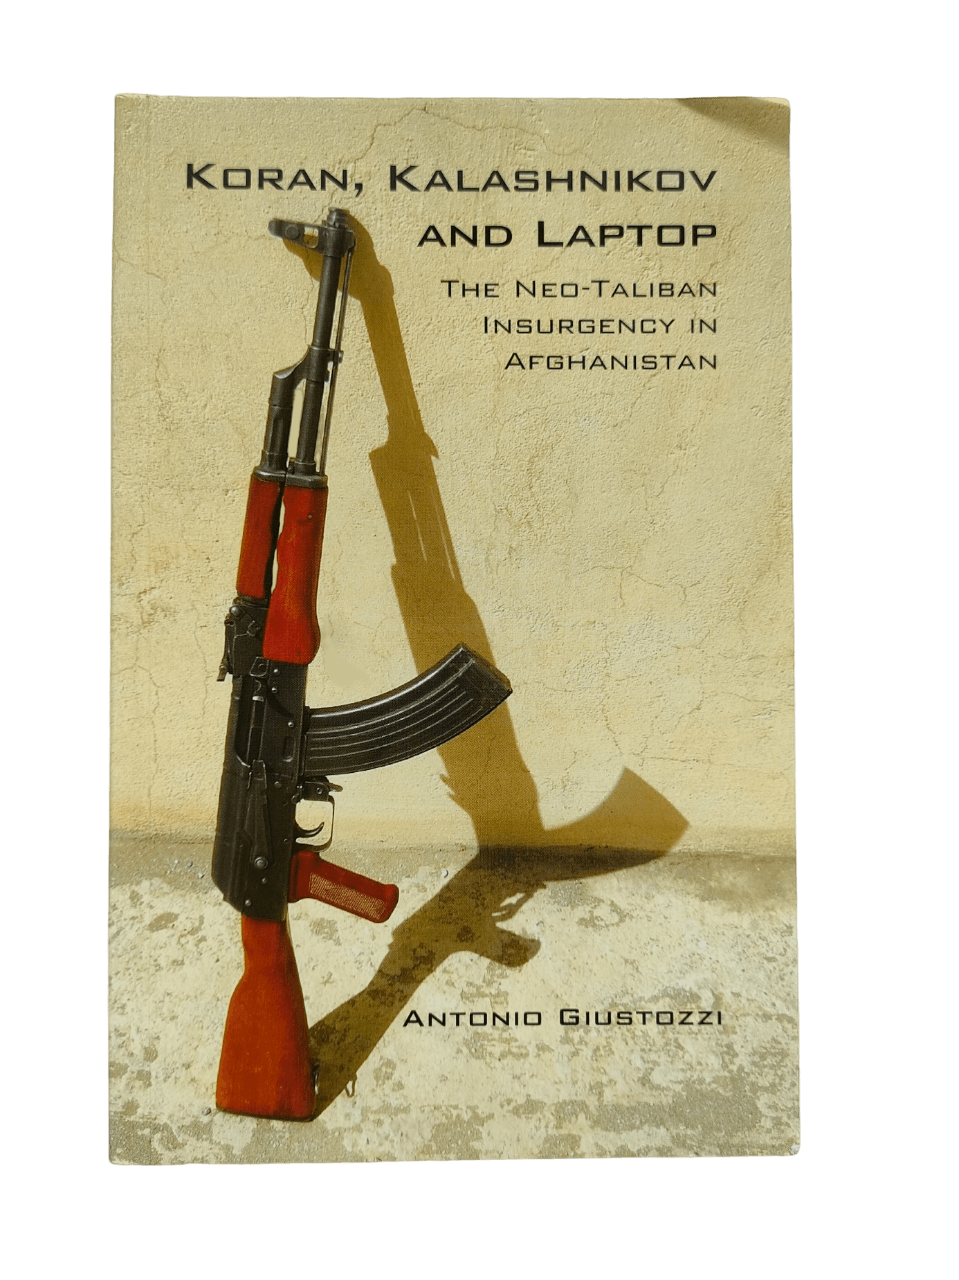 Koran, Kalashnikov and Laptop - KHAJISTAN™